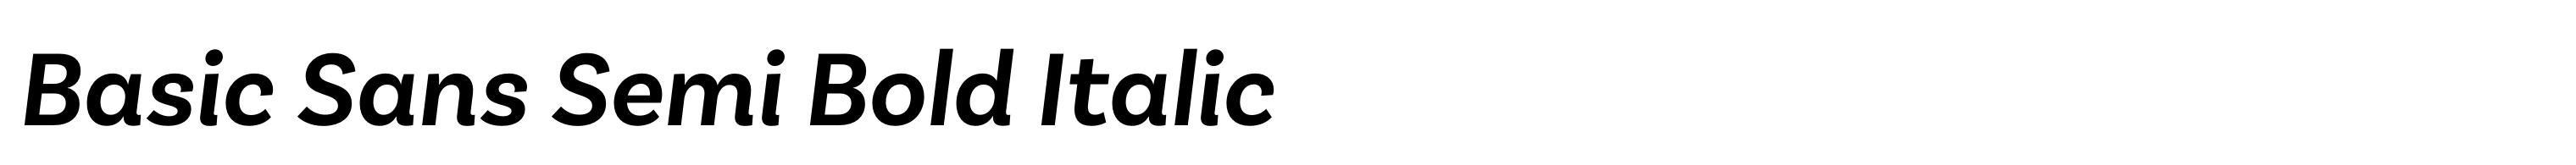 Basic Sans Semi Bold Italic